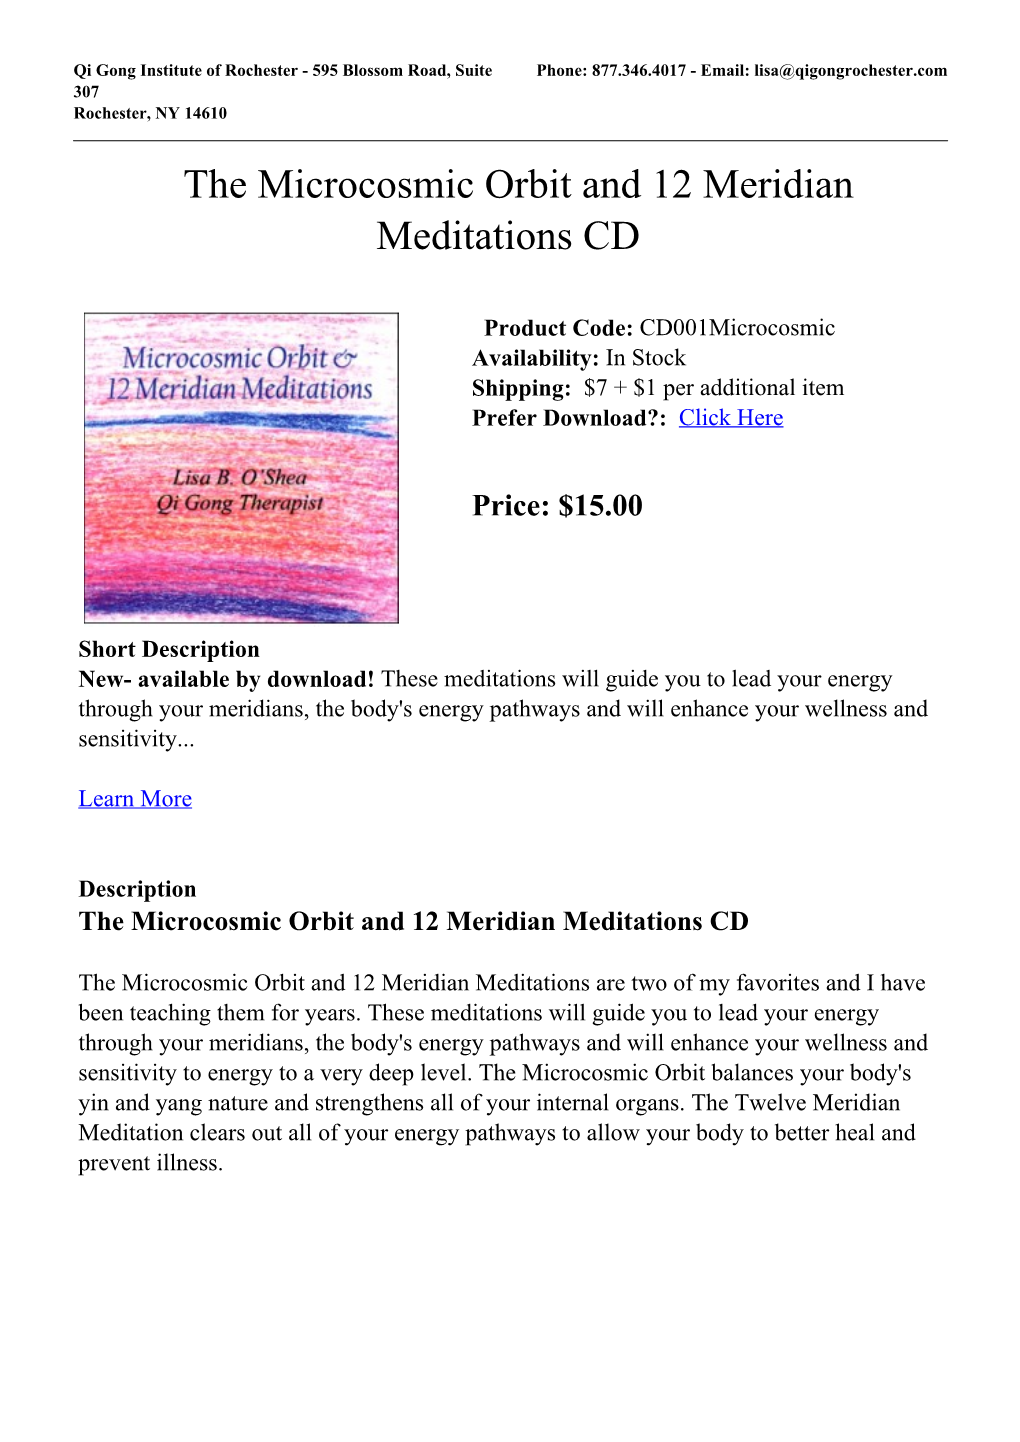 The Microcosmic Orbit and 12 Meridian Meditations CD